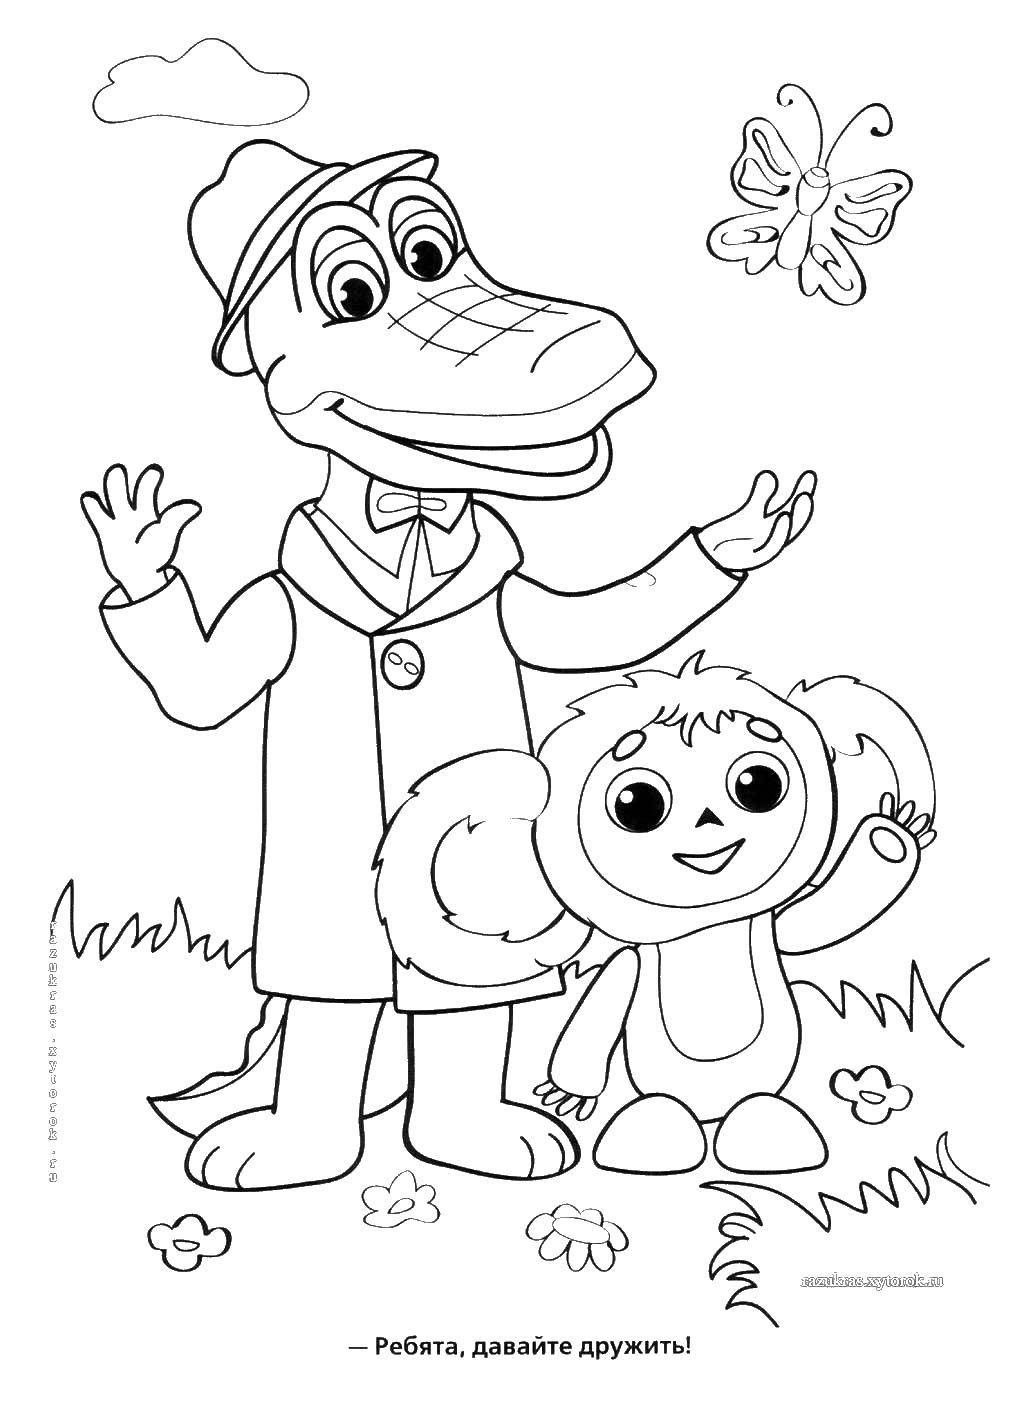 Coloring Crocodile Gena and Cheburashka. Category cartoons. Tags:  Shrek, cartoons, Cheburashka.